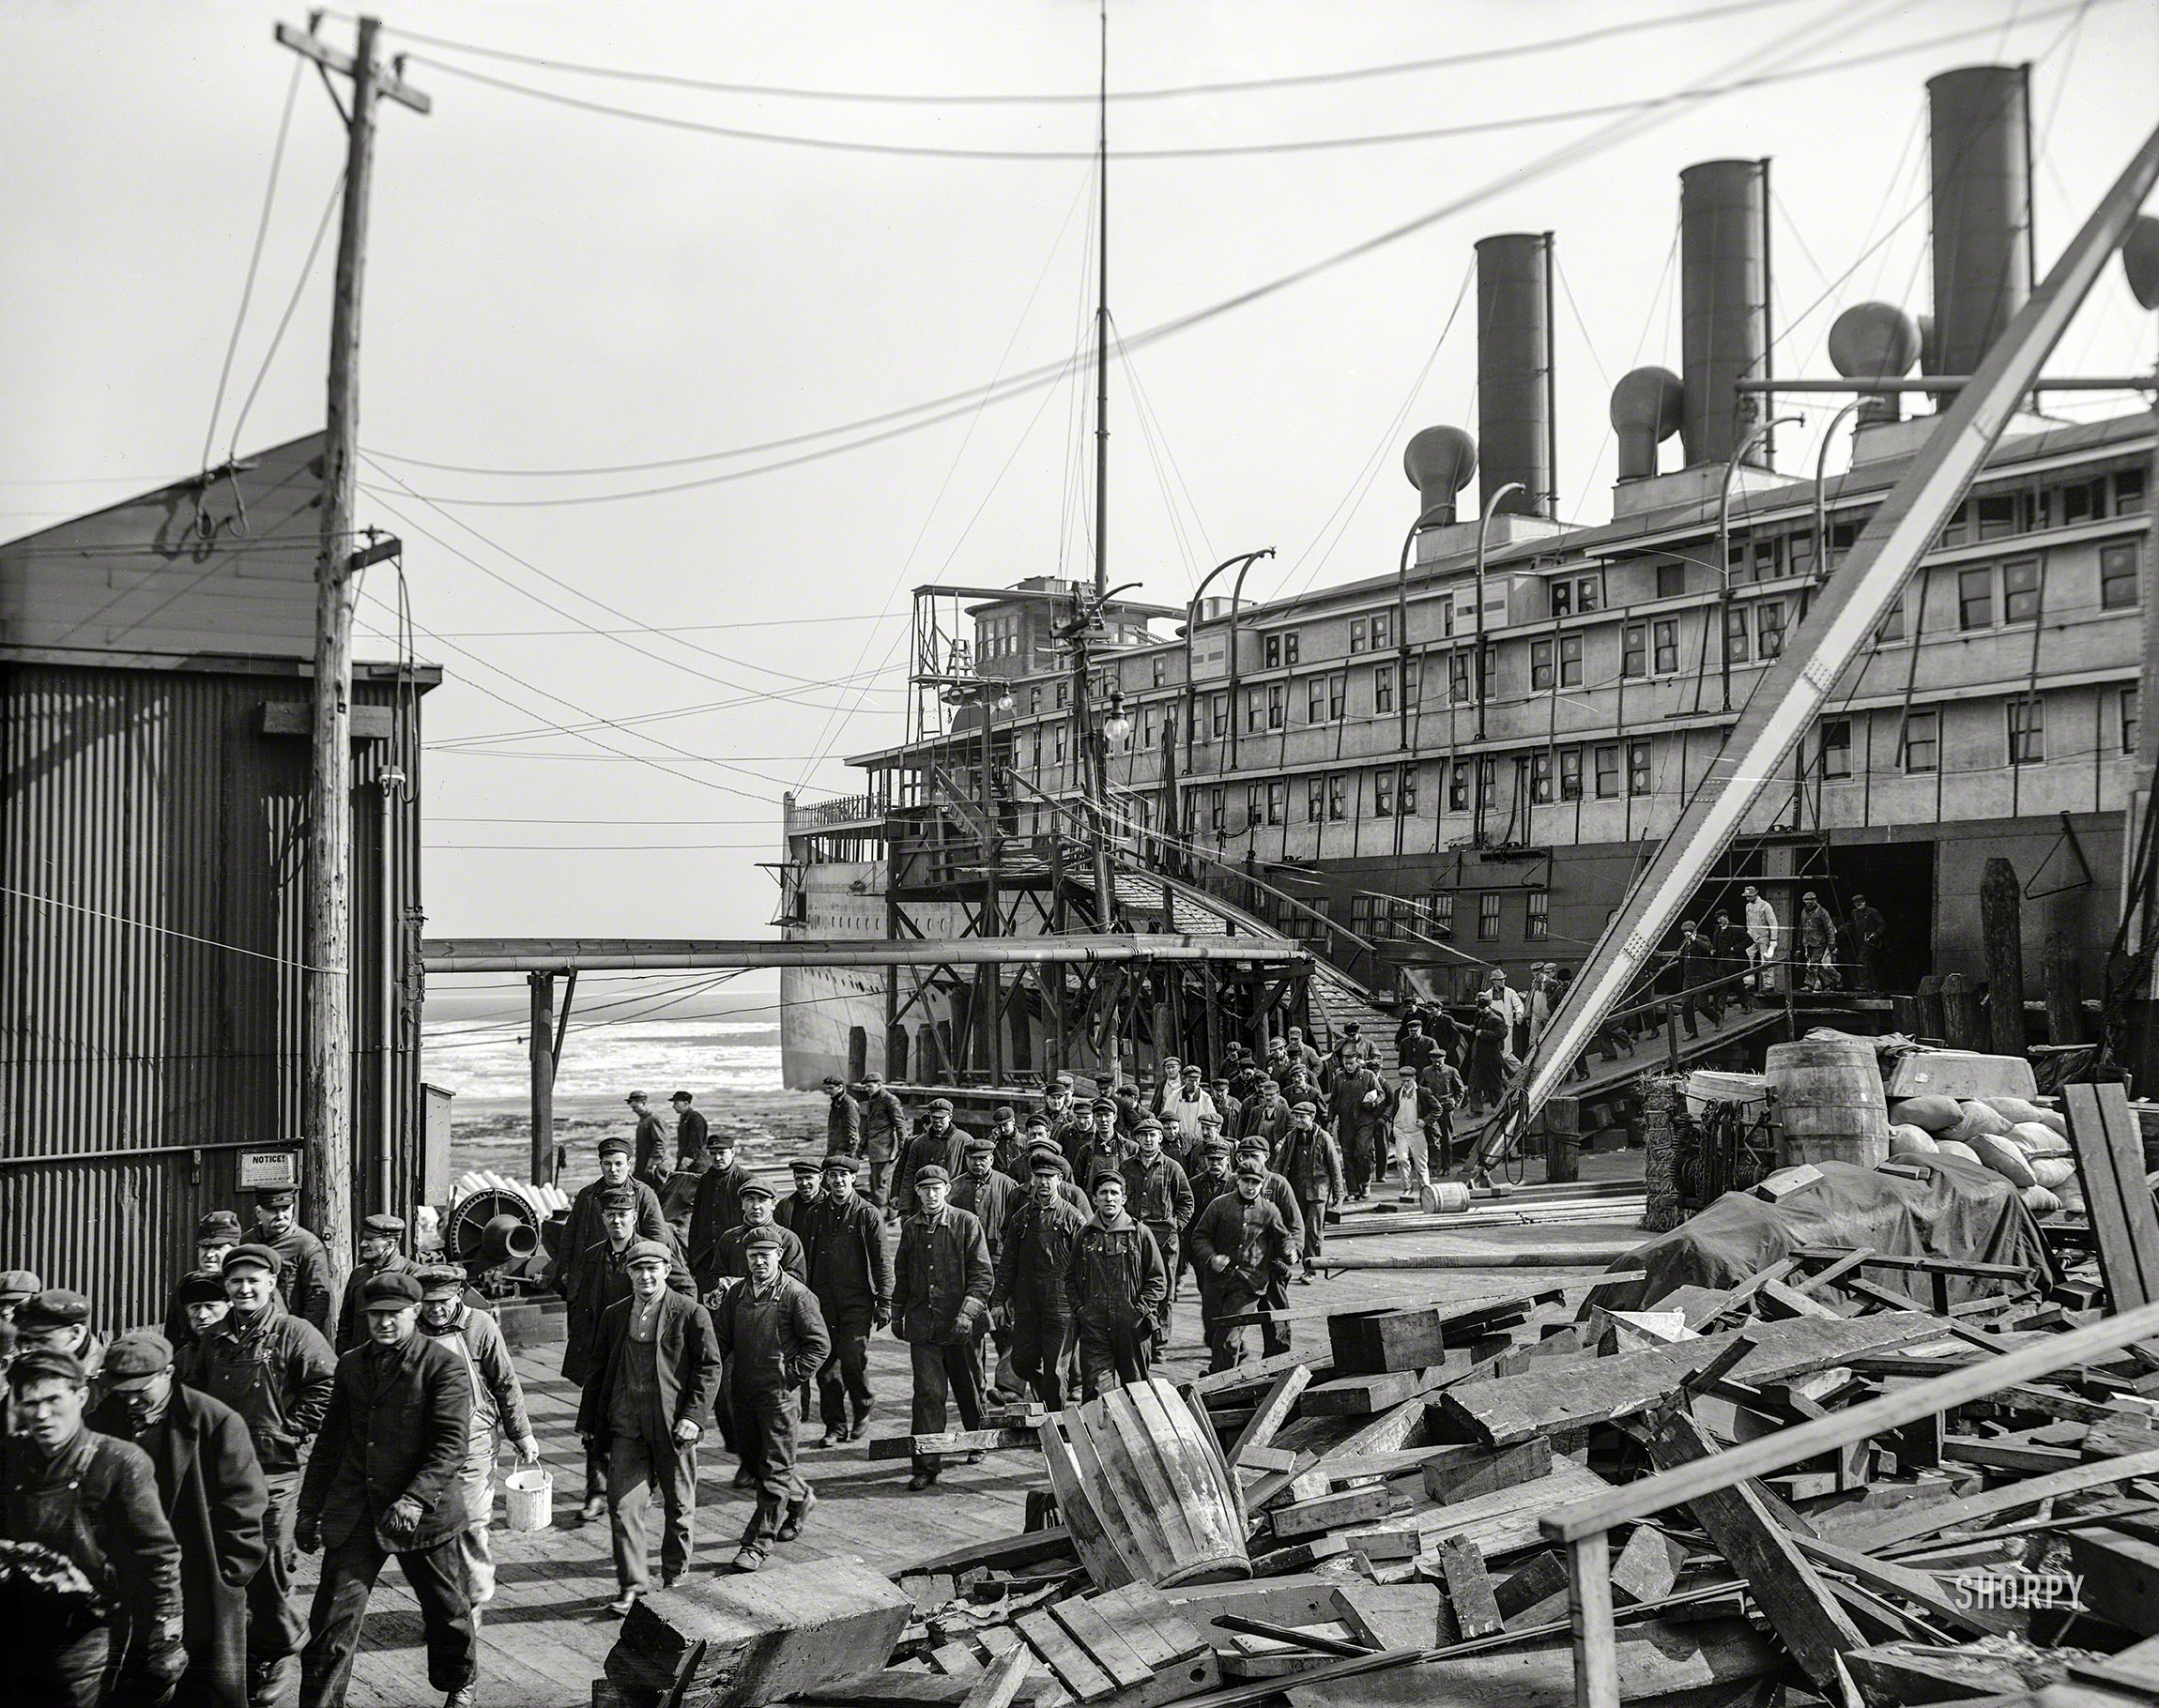 February 14, 1913. "Noon -- Steamer Seeandbee." Lunch break for men working on the sidewheeler Seeandbee at the Detroit Ship Building yard in Wyandotte. View full size.